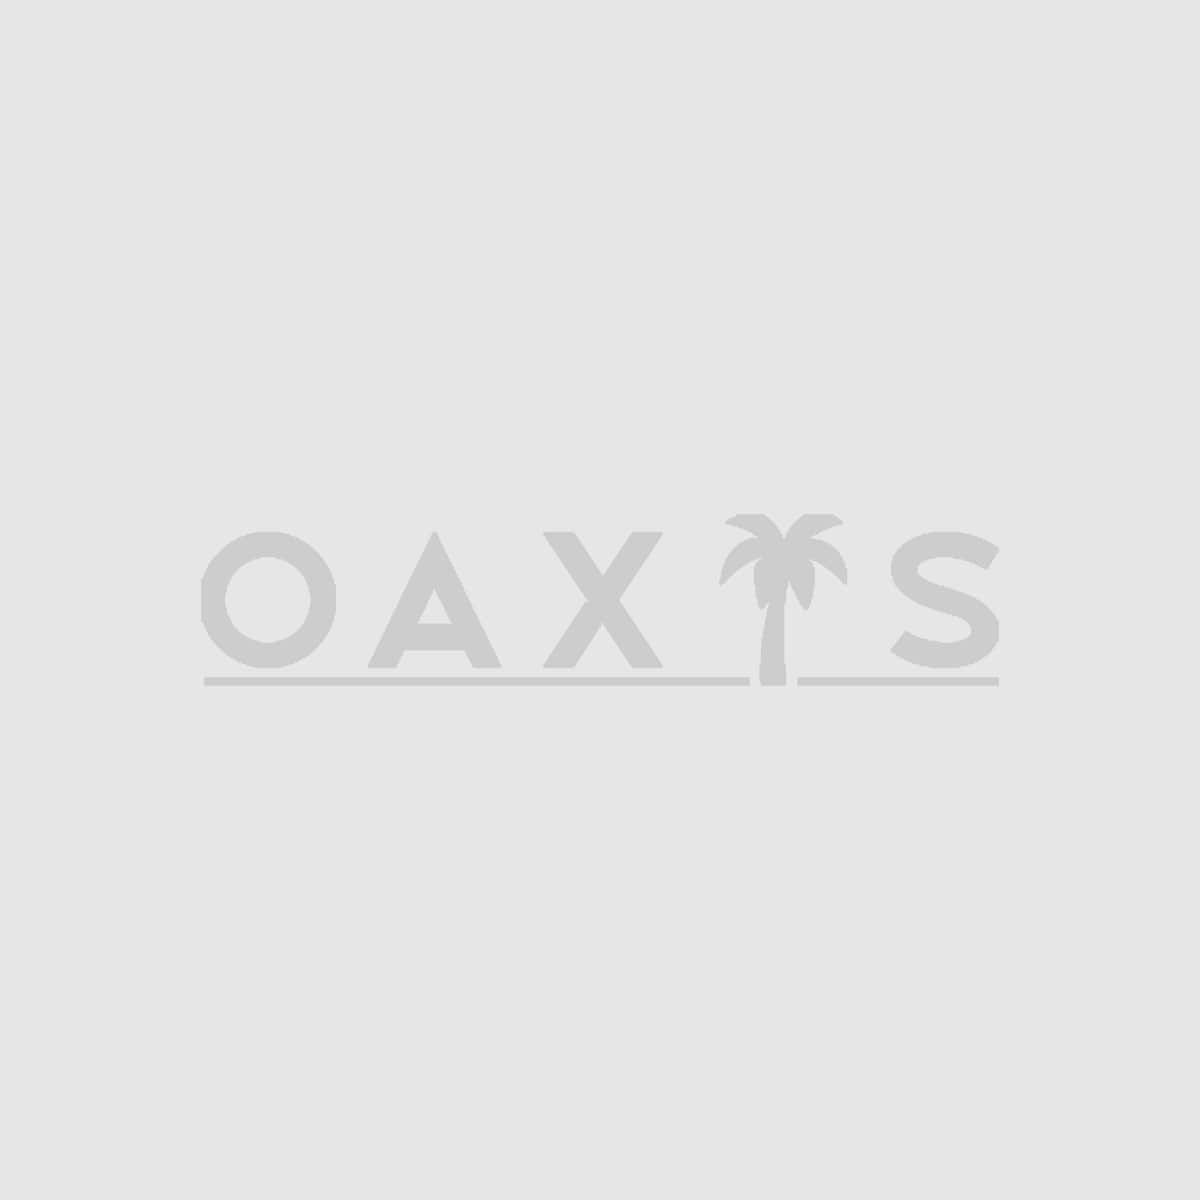 Camiseta corta para mujer marca OAXIS, con estampado de GIRL